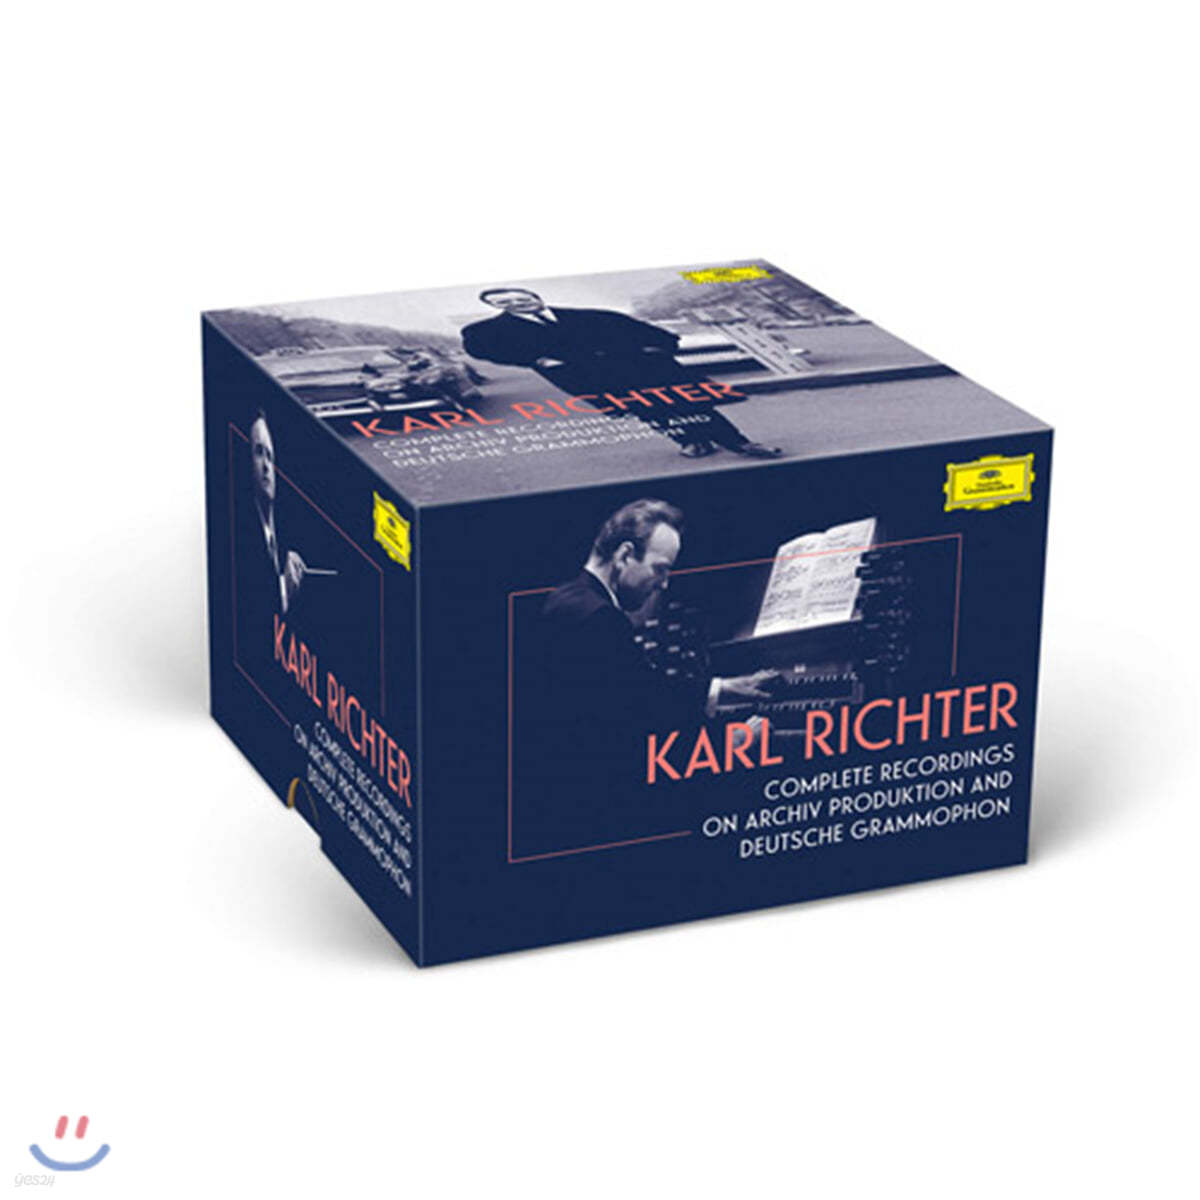 Karl Richter 칼 리히터 DG, Archiv 녹음 전집 (The Complete Recordings on ARCHIV PRODUKTION and Deutsche Grammophon) 